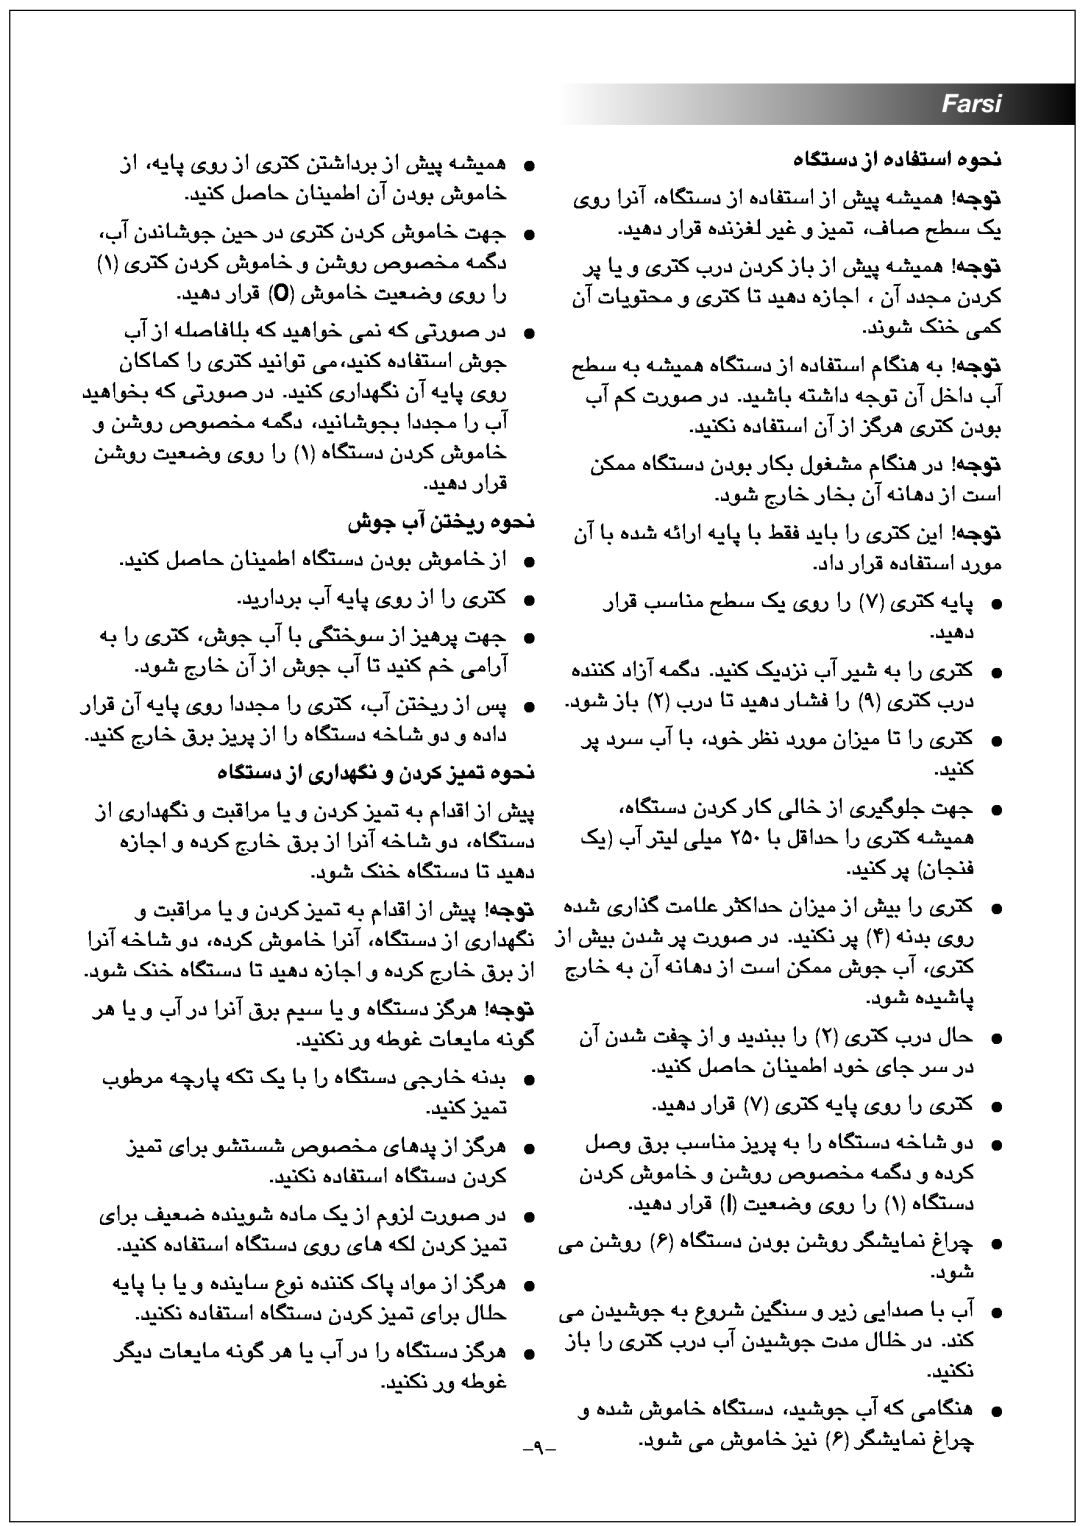 Black & Decker JC100 manual Farsi, ﺵﻮﺟ ﺏﺁ ﻦﺘﺨﯾﺭ ﻩﻮﺤﻧ, ﻩﺎﮕﺘﺳﺩ ﺯﺍ ﯼﺭﺍﺪﻬﮕﻧ ﻭ ﻥﺩﺮﮐ ﺰﯿﻤﺗ ﻩﻮﺤﻧ, ﻩﺎﮕﺘﺳﺩ ﺯﺍ ﻩﺩﺎﻔﺘﺳﺍ ﻩﻮﺤﻧ 